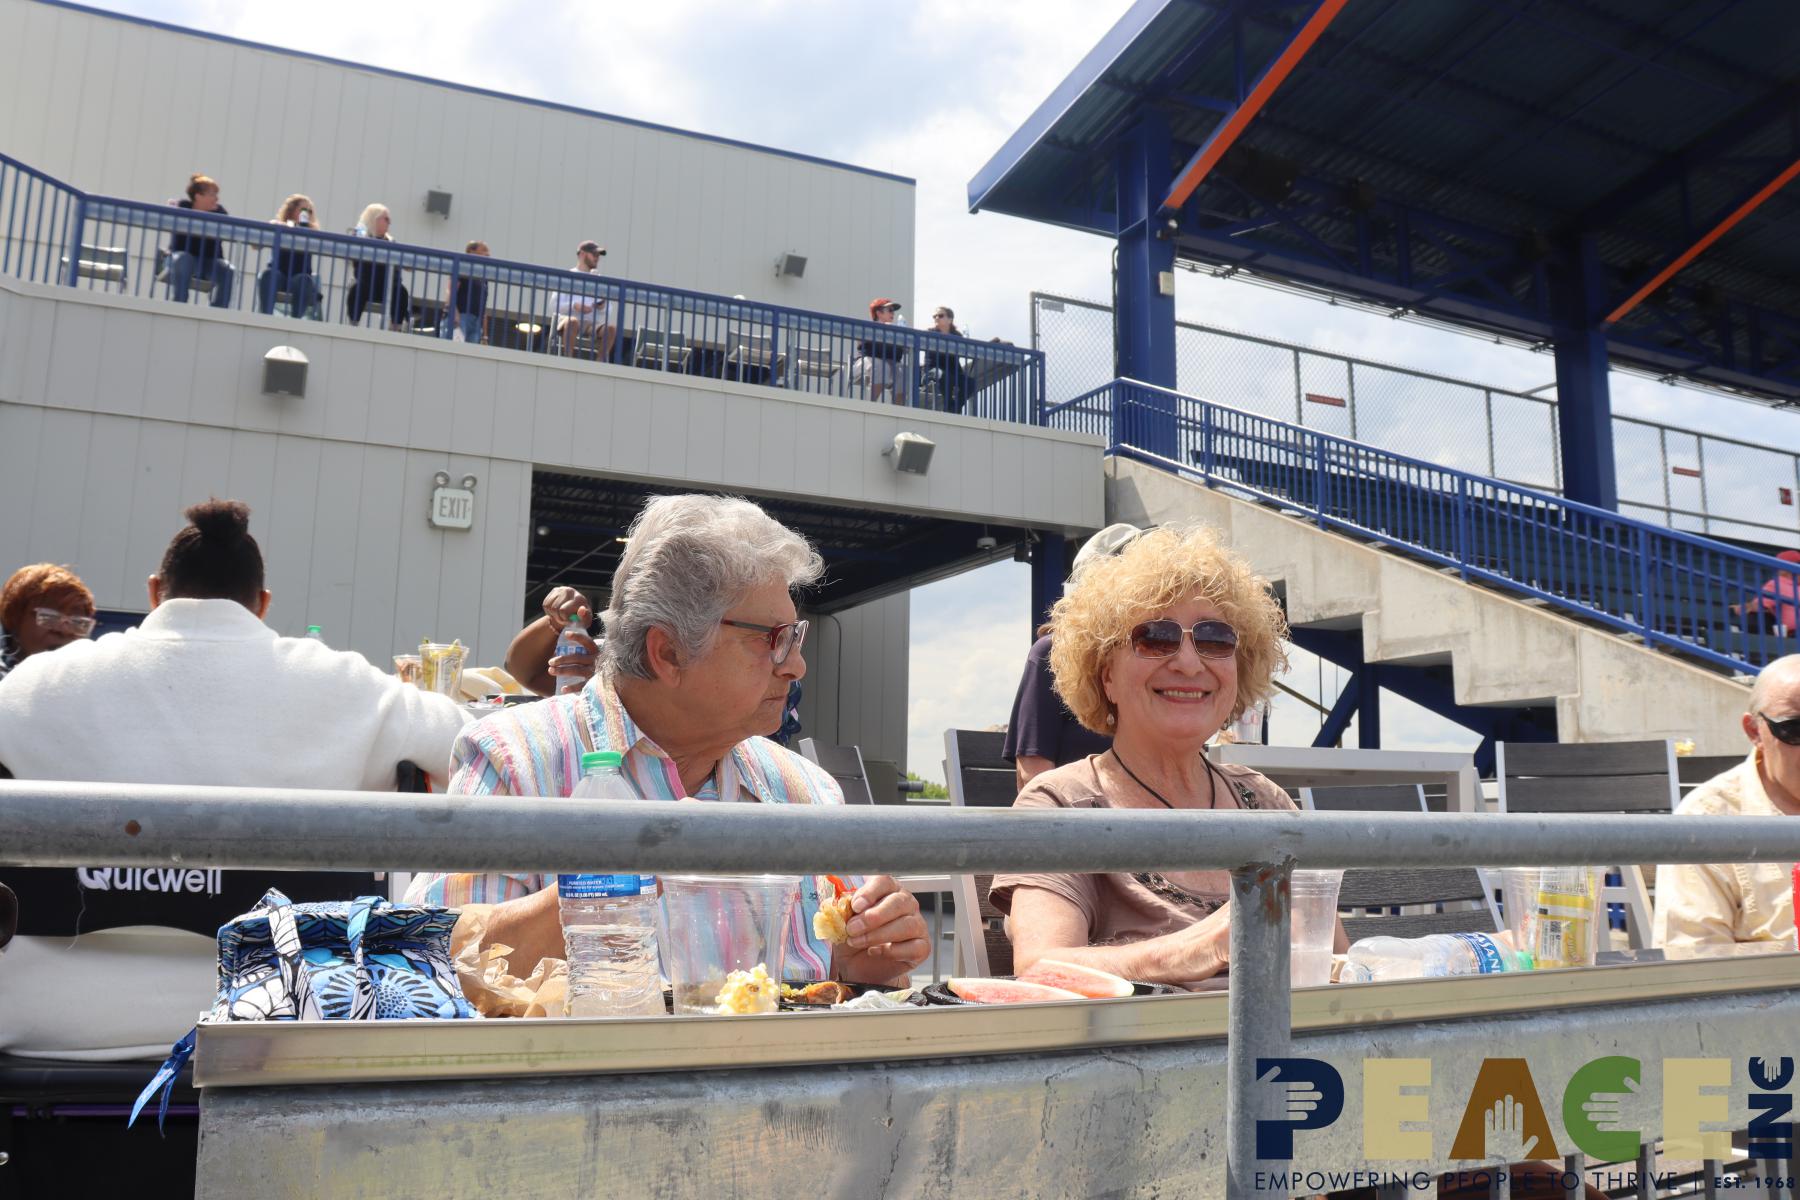 Our beloved Eastwood Seniors enjoyed cheering on the Syracuse Mets